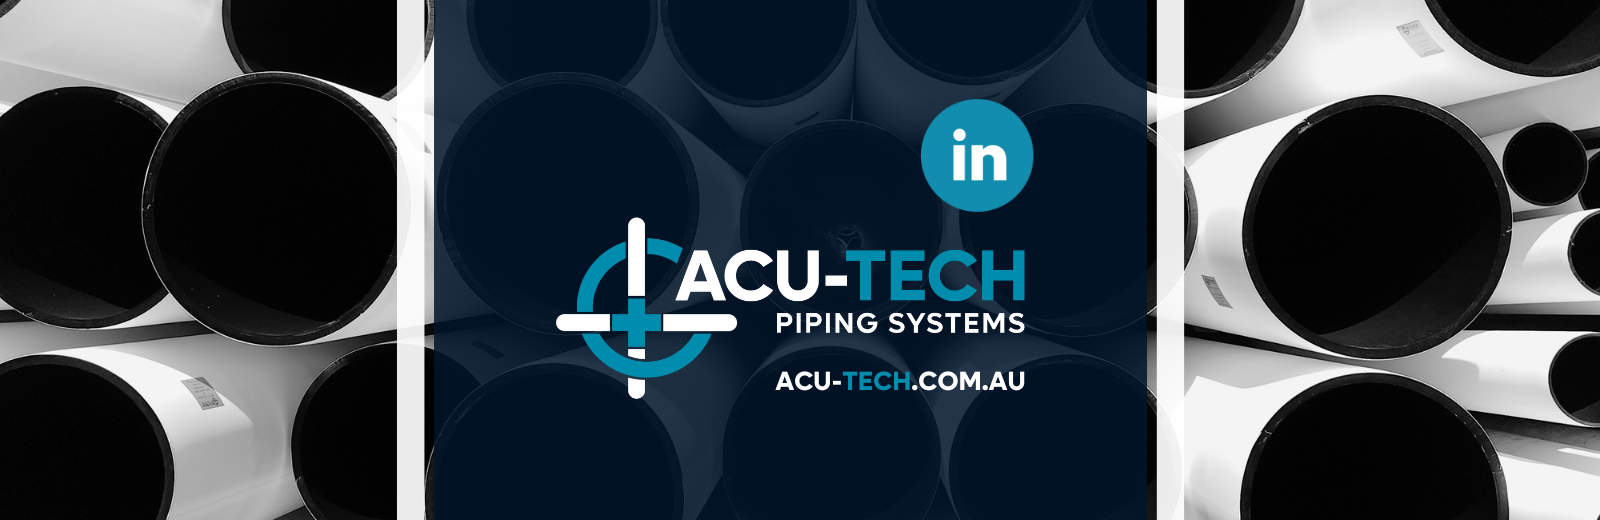 Follow Acu-Tech on LinkedIN